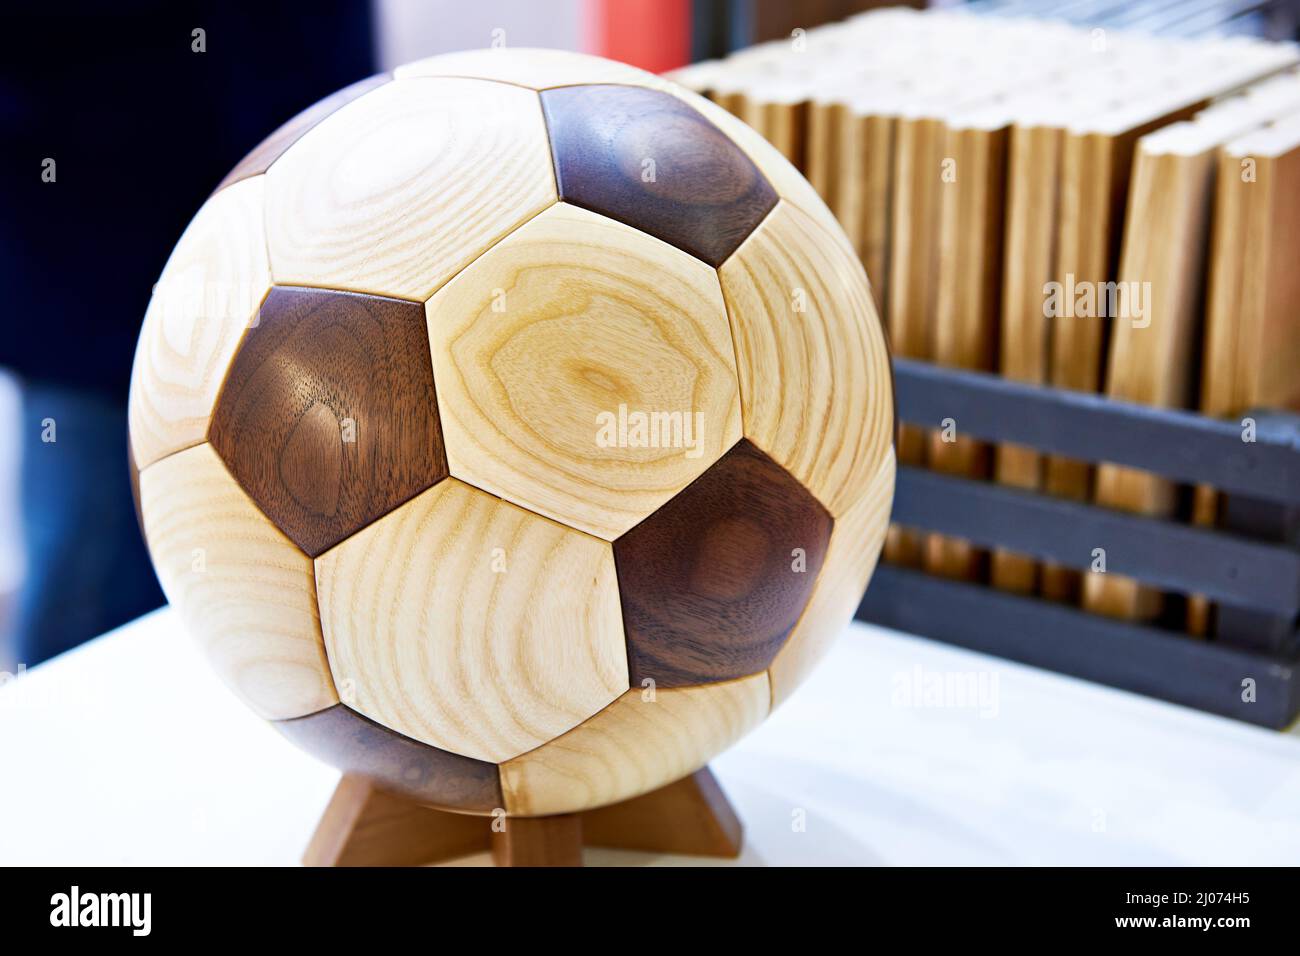 Wooden soccer ball gift symbol Stock Photo